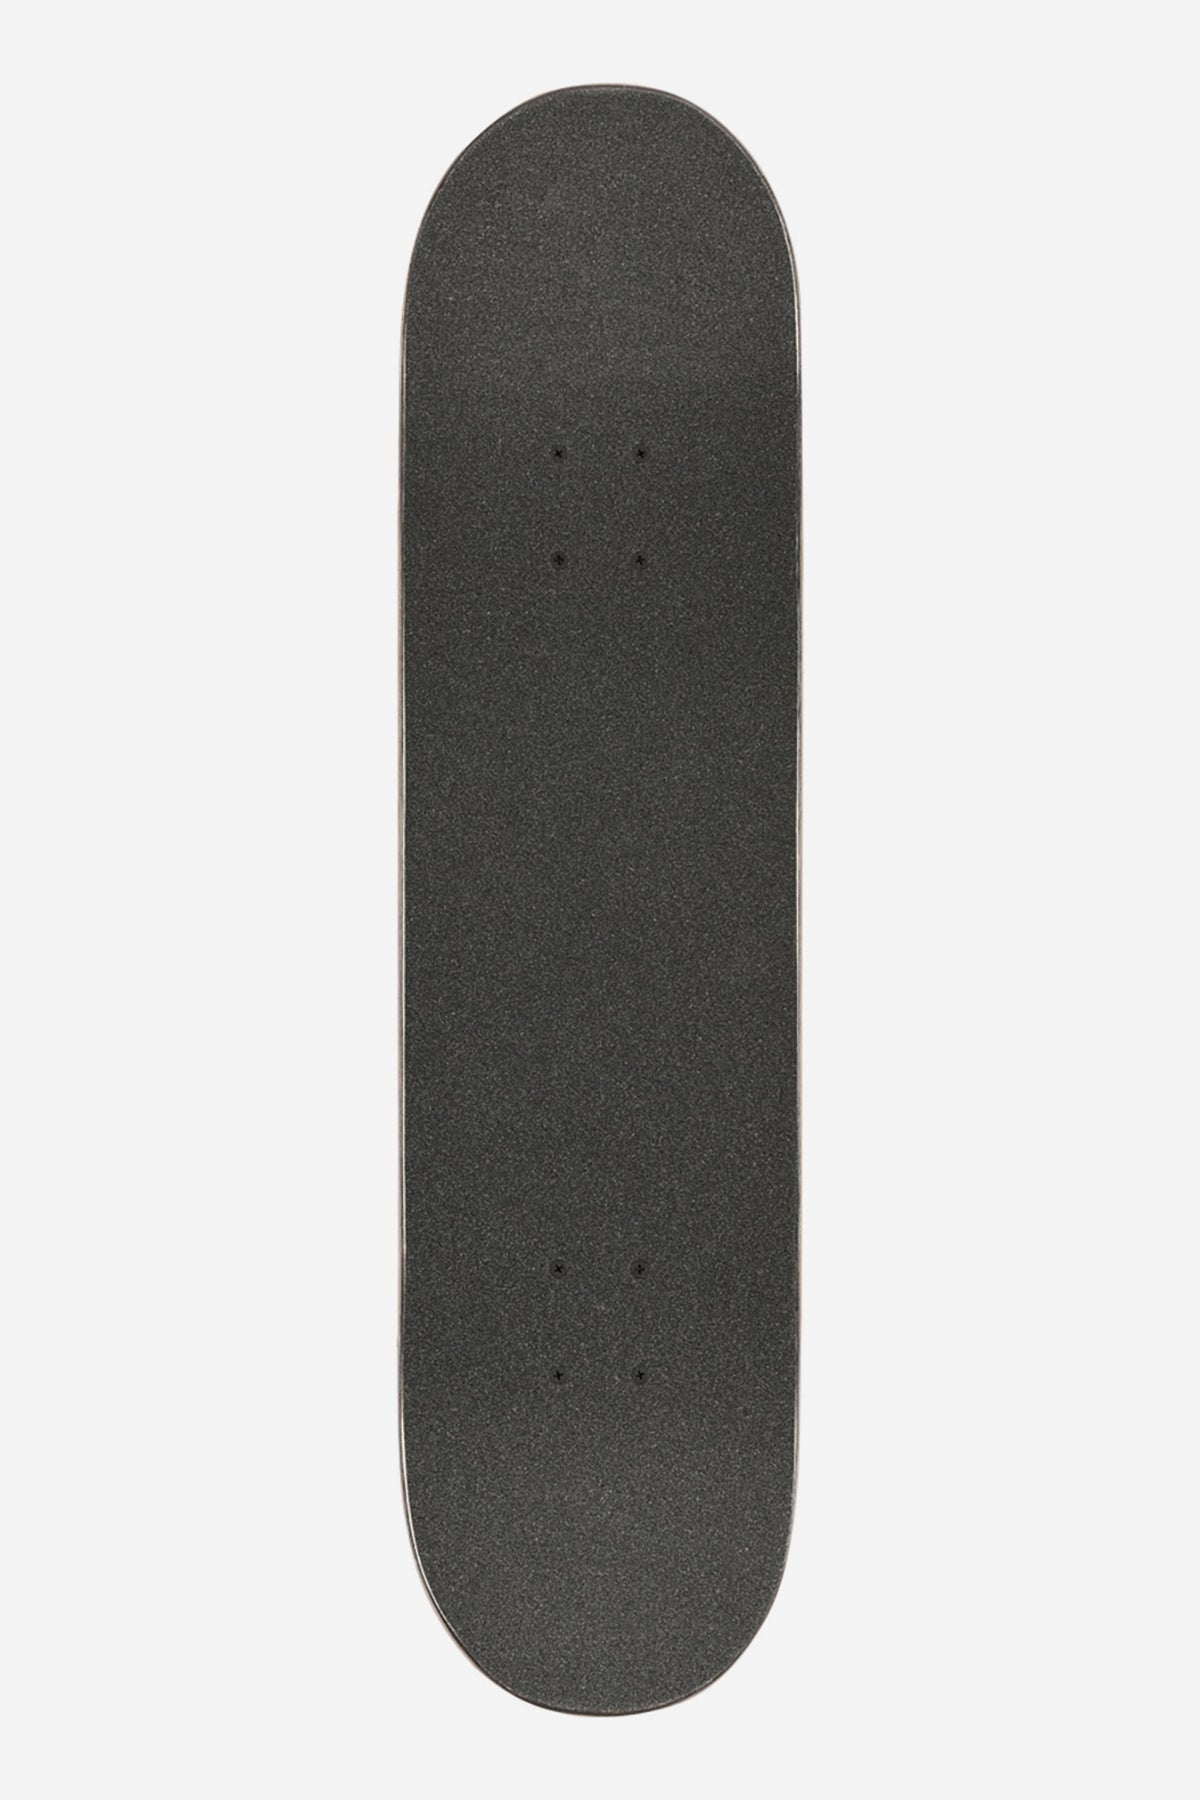 Globe - Gutstock - Navy - 7.875" Komplett Skateboard